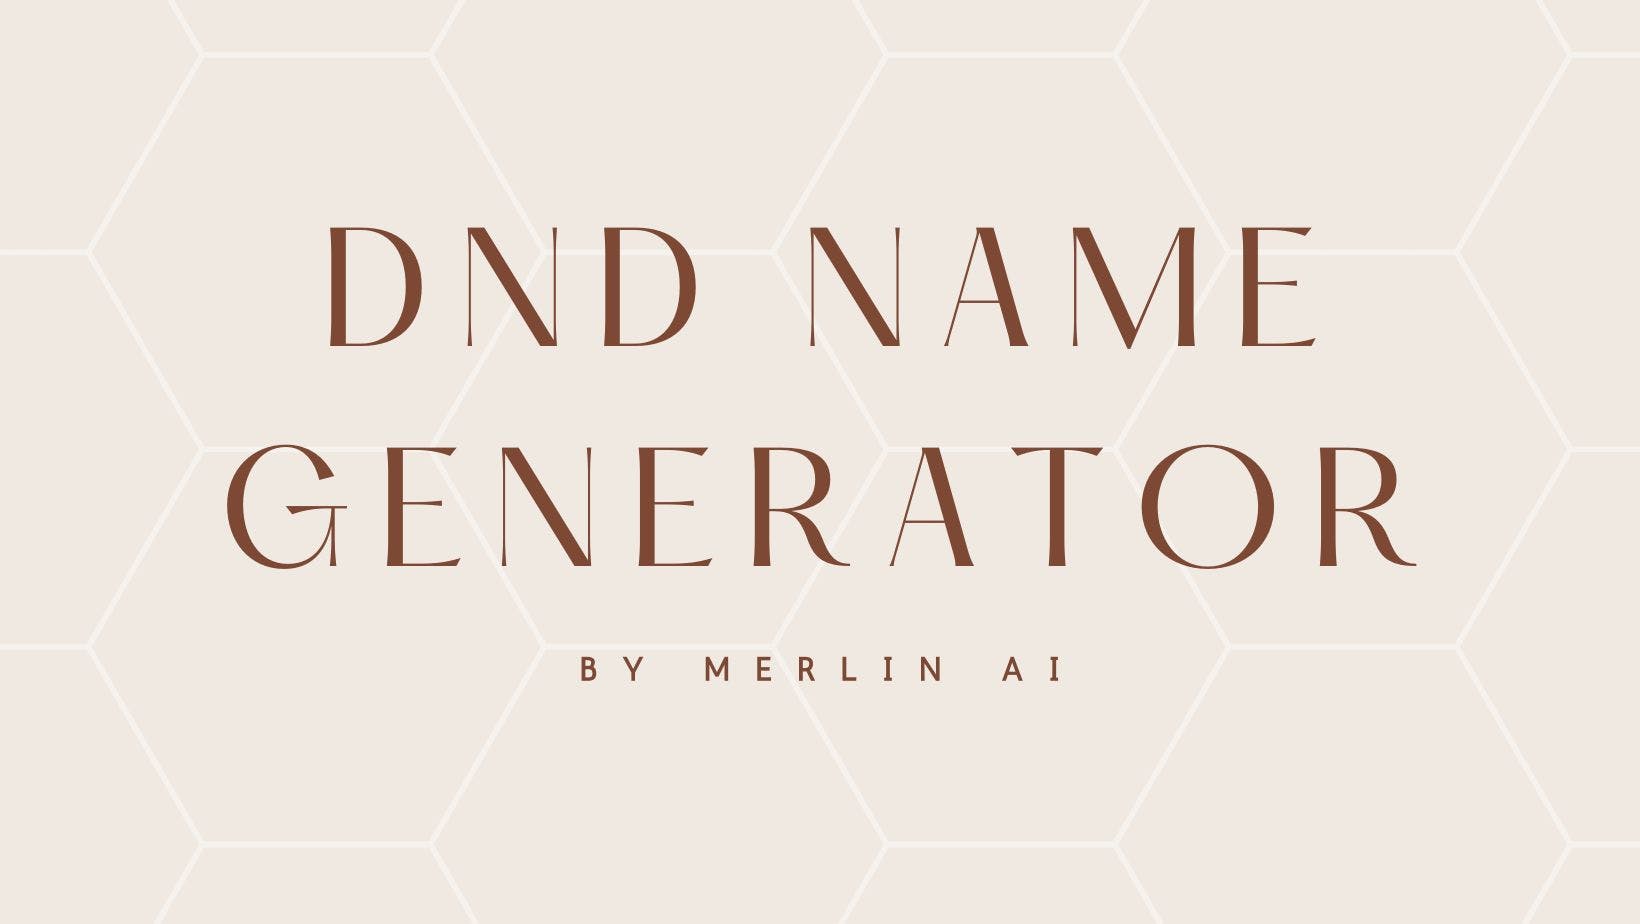 Cover Image for Бесплатный генератор имен для ДНД от Merlin AI